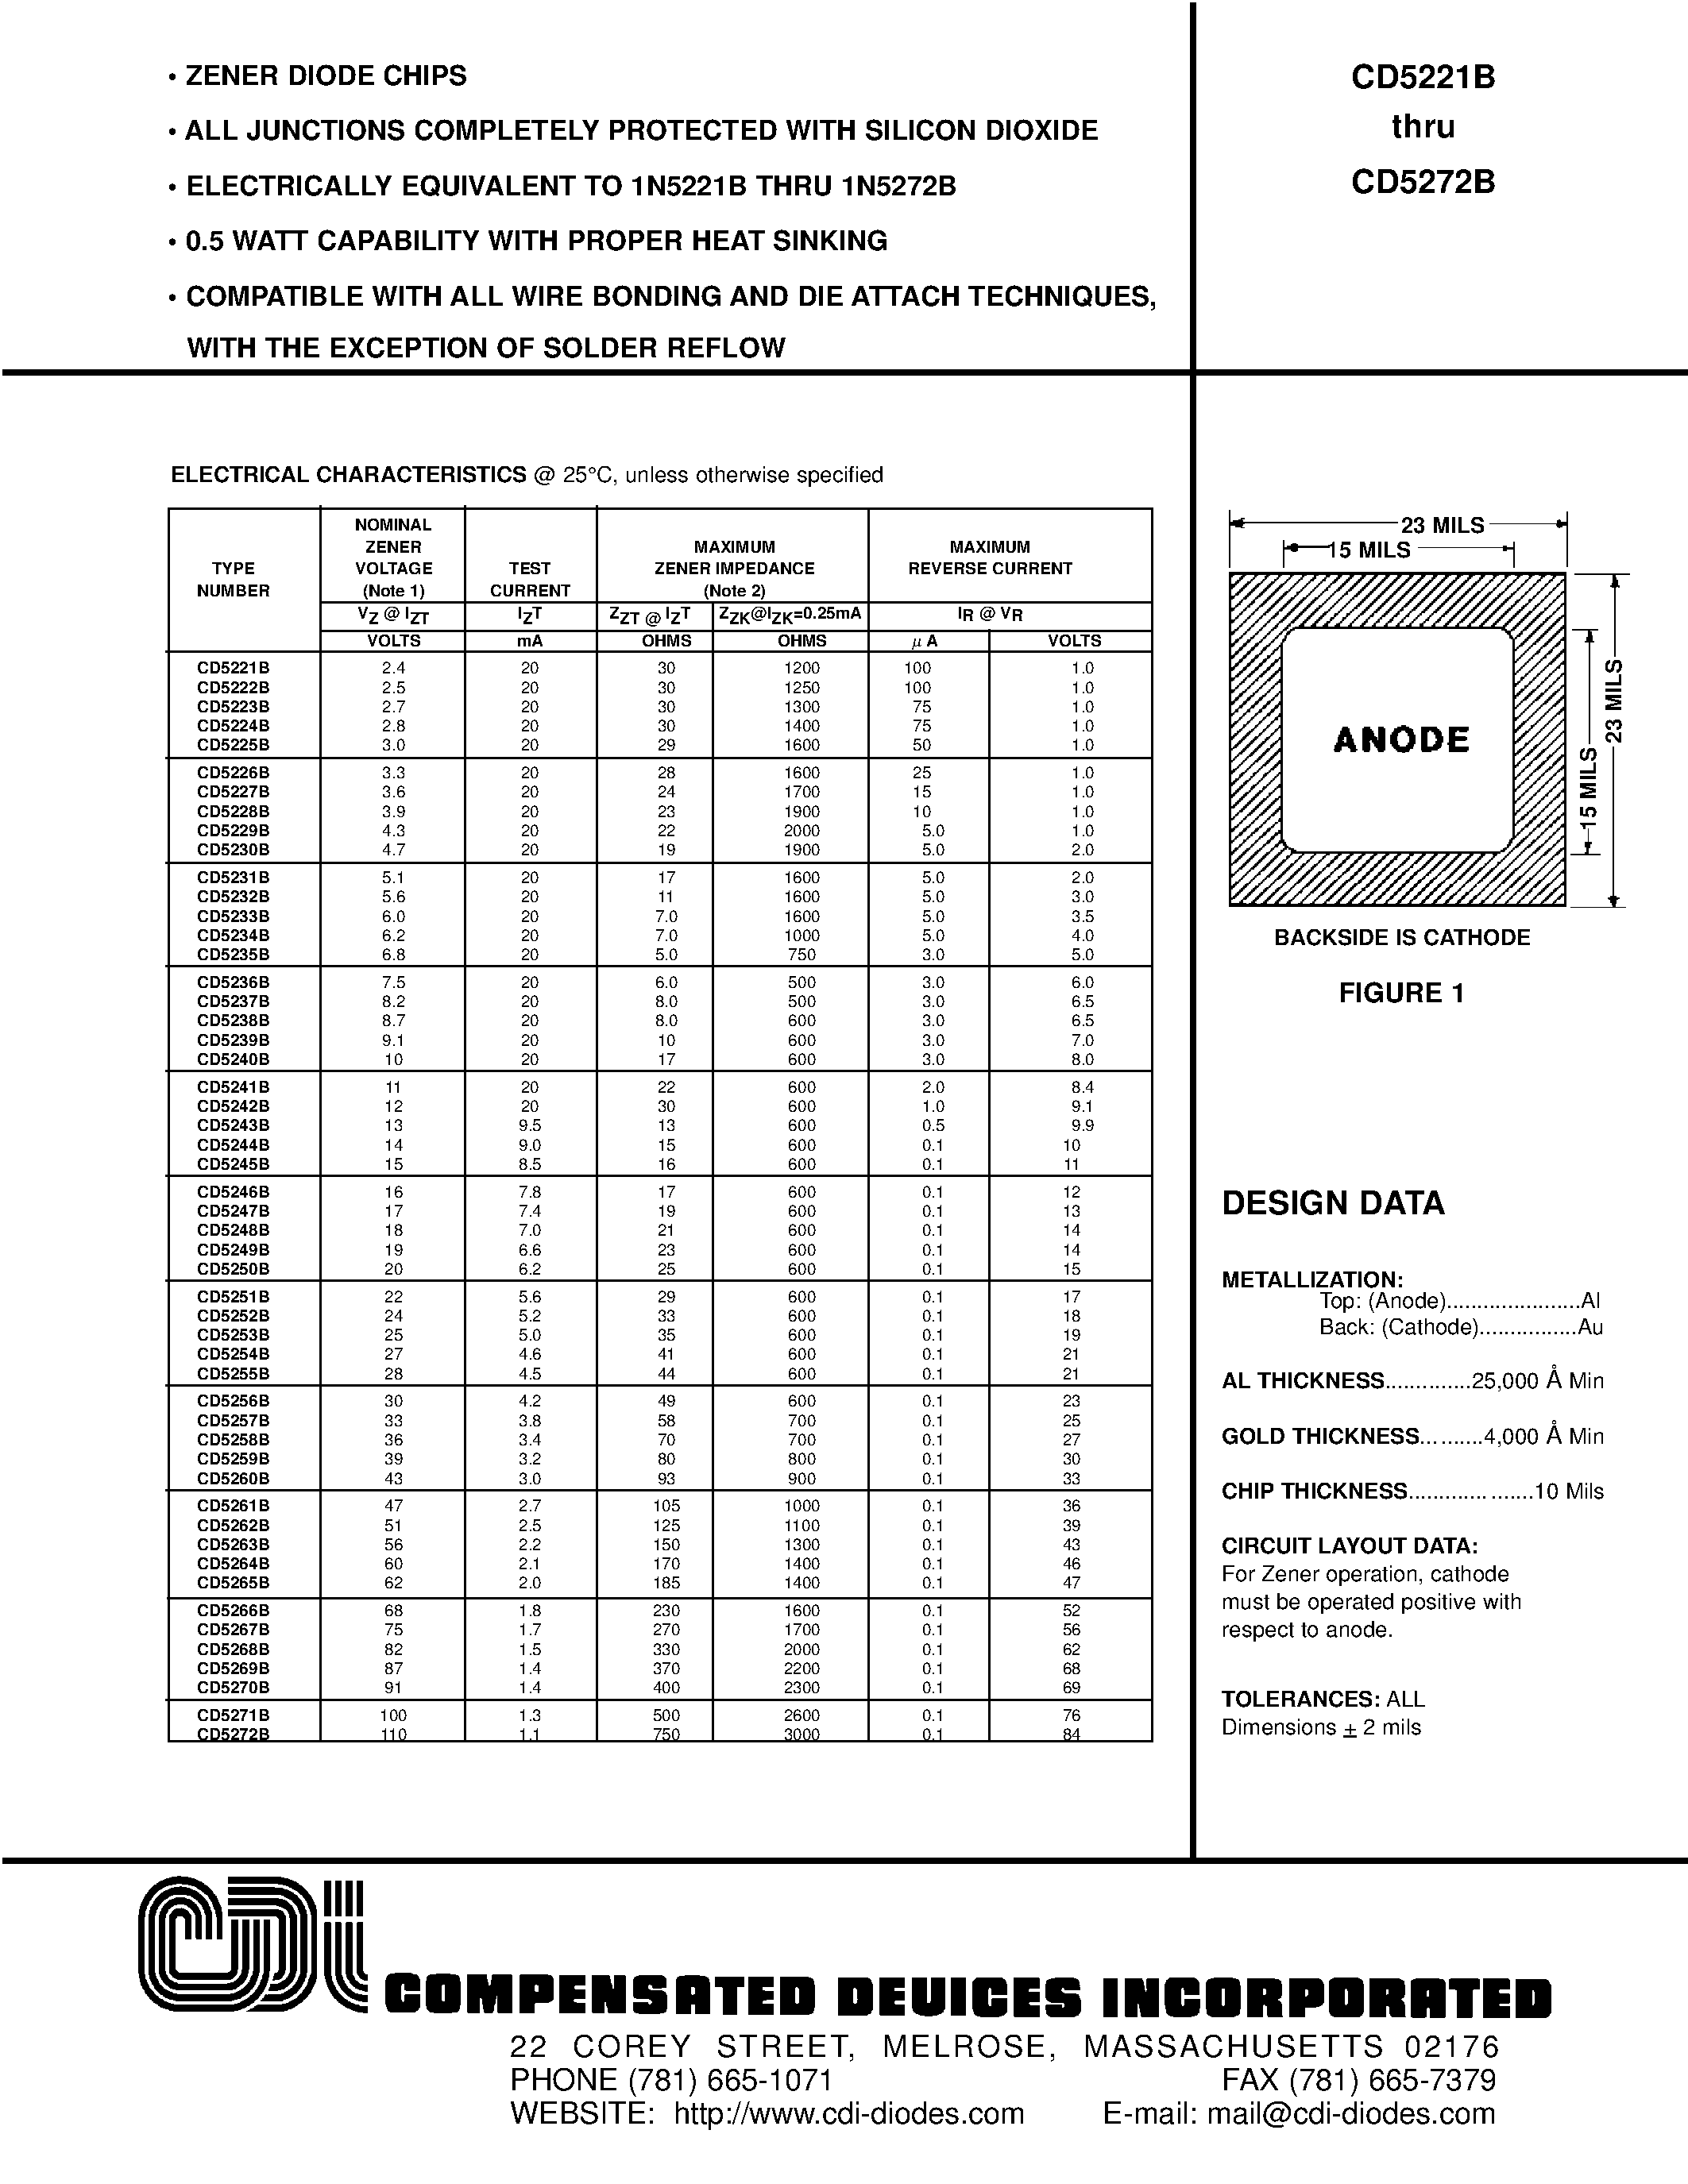 Datasheet CD5224B - ZENER DIODE CHIPS page 1